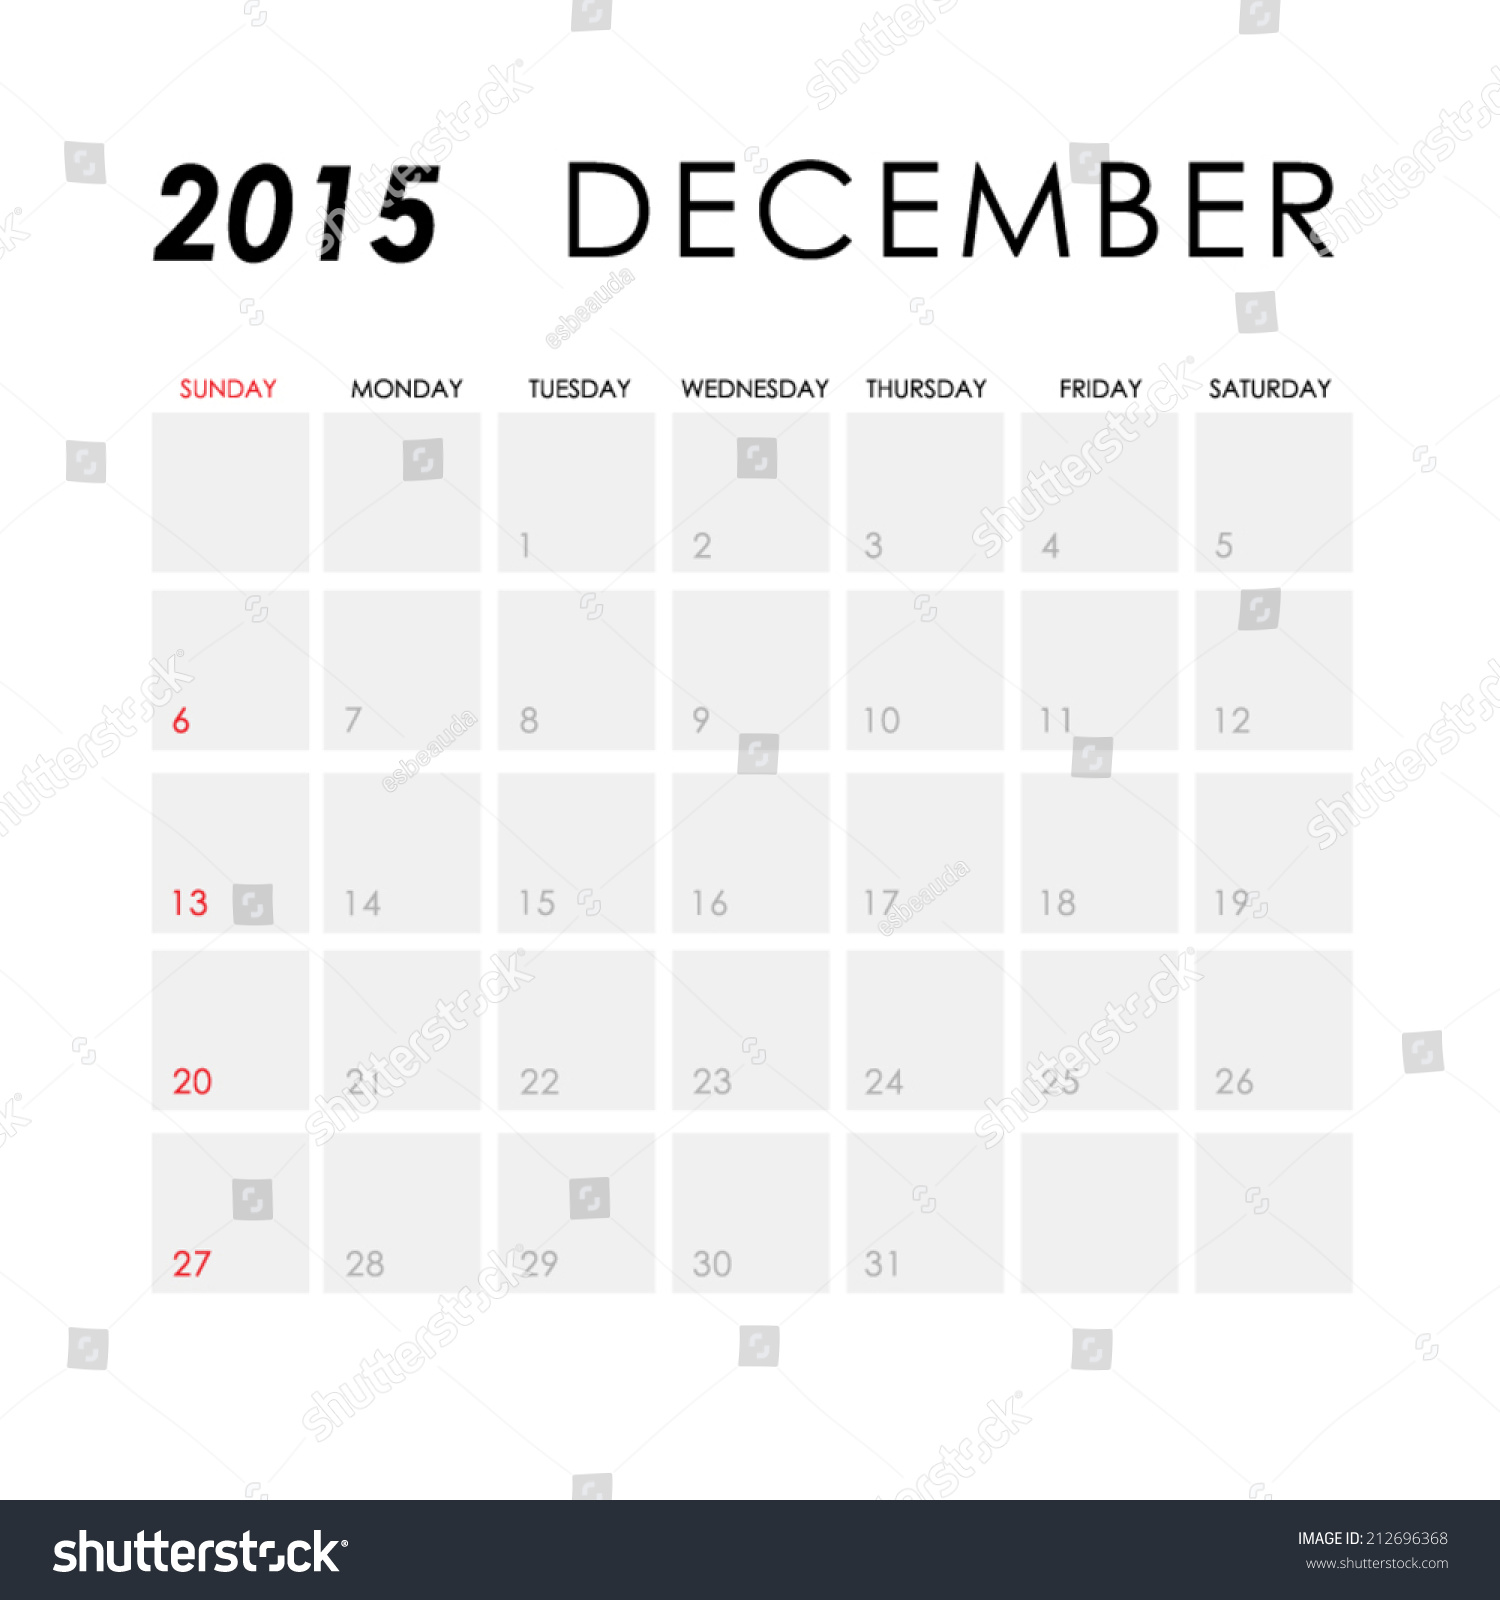 Template Calendar December 2015 Stock Vector (Royalty Free) 212696368